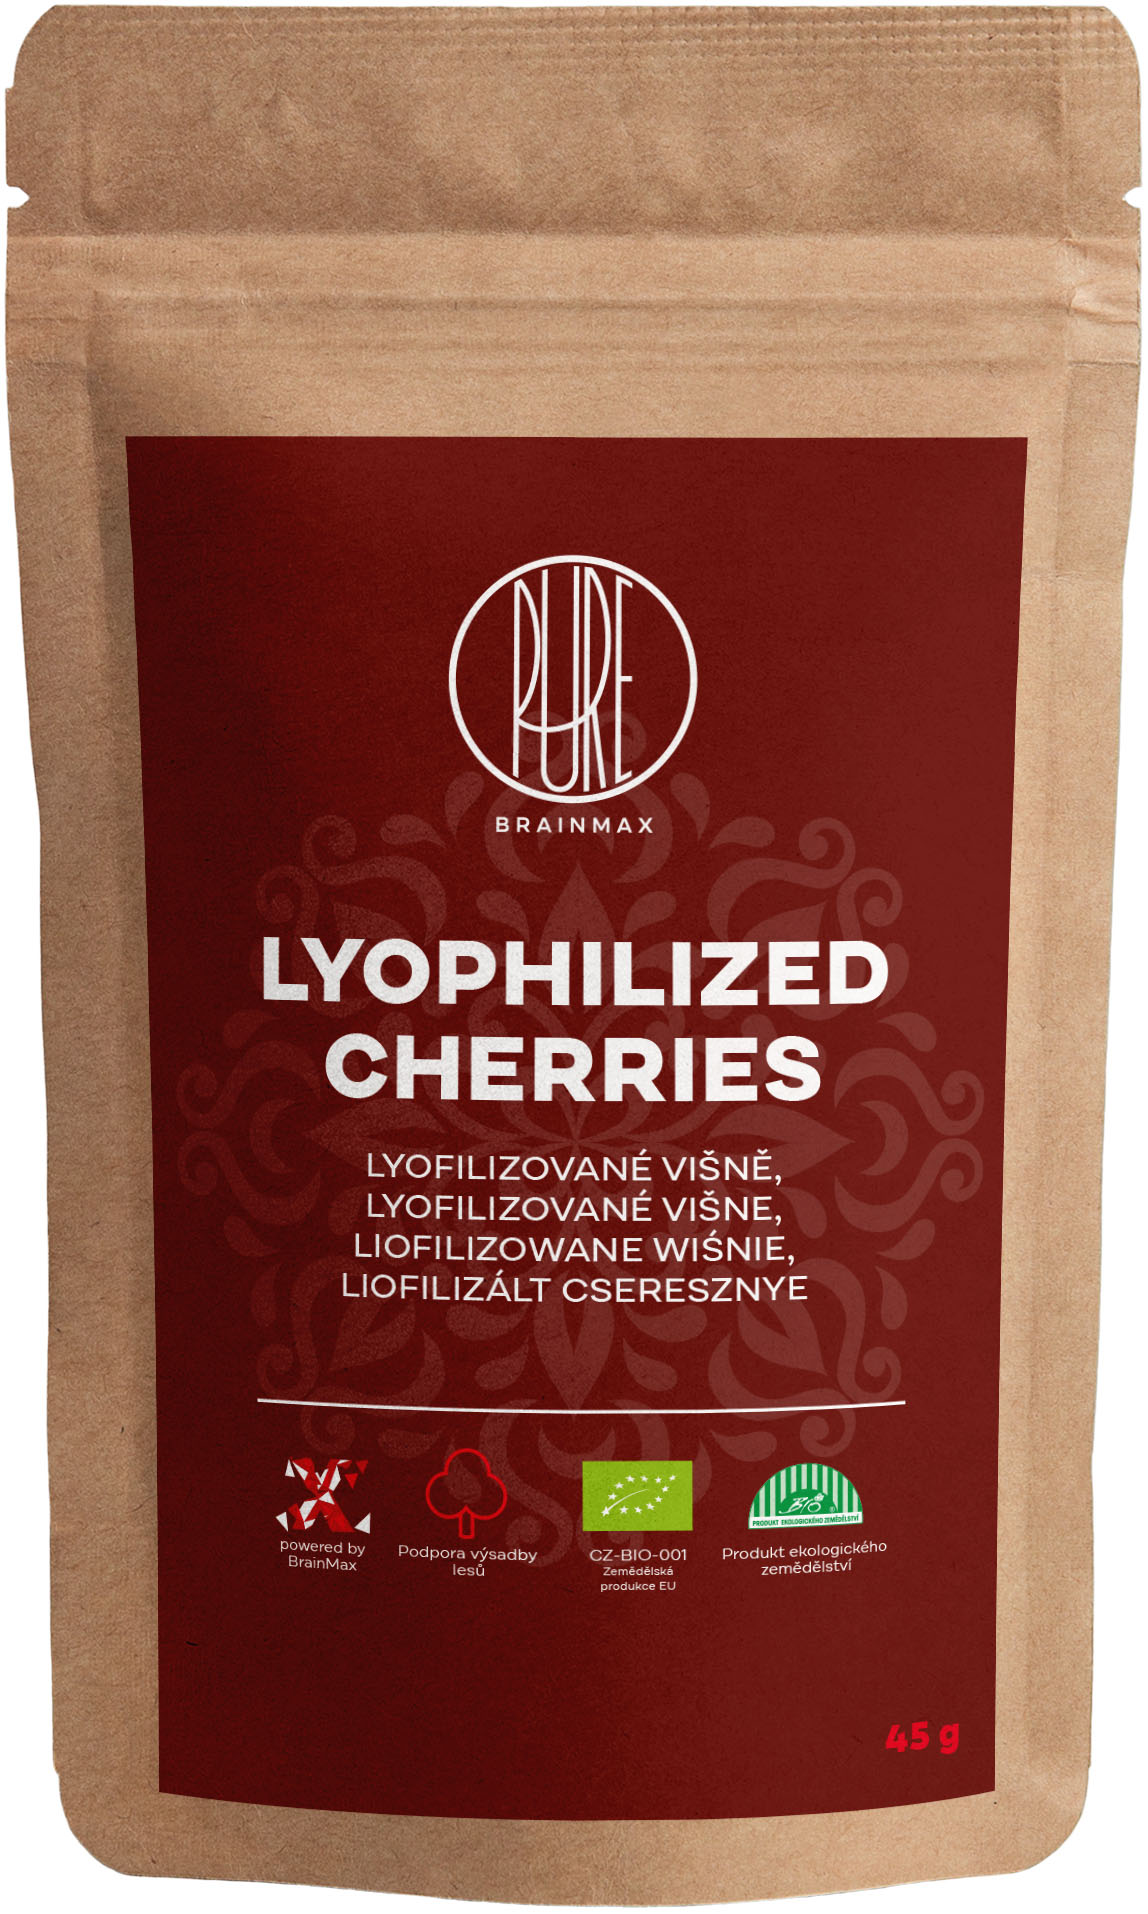 BrainMax Pure Lyophilized Cherries, Lyofilizované višně, BIO, 45 g *CZ-BIO-001 certifikát